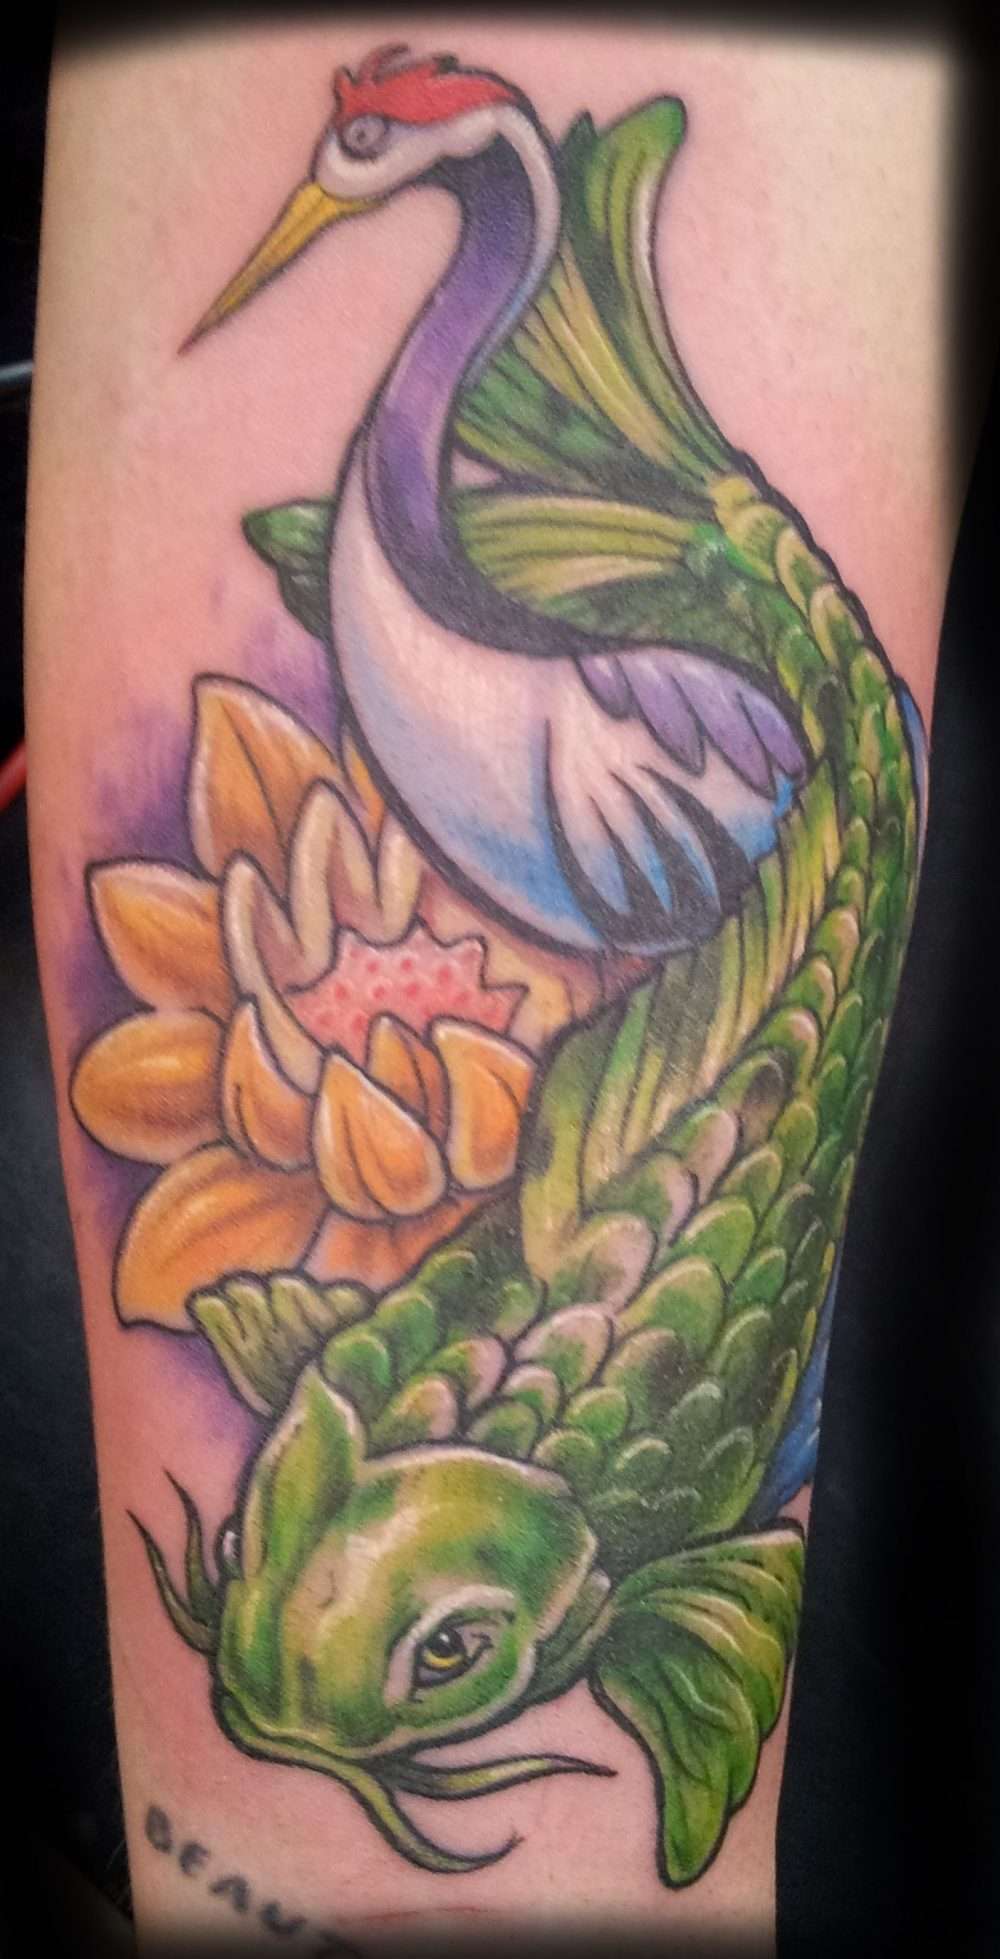 Tatuaje de pez koi verde, flor de loto y ave